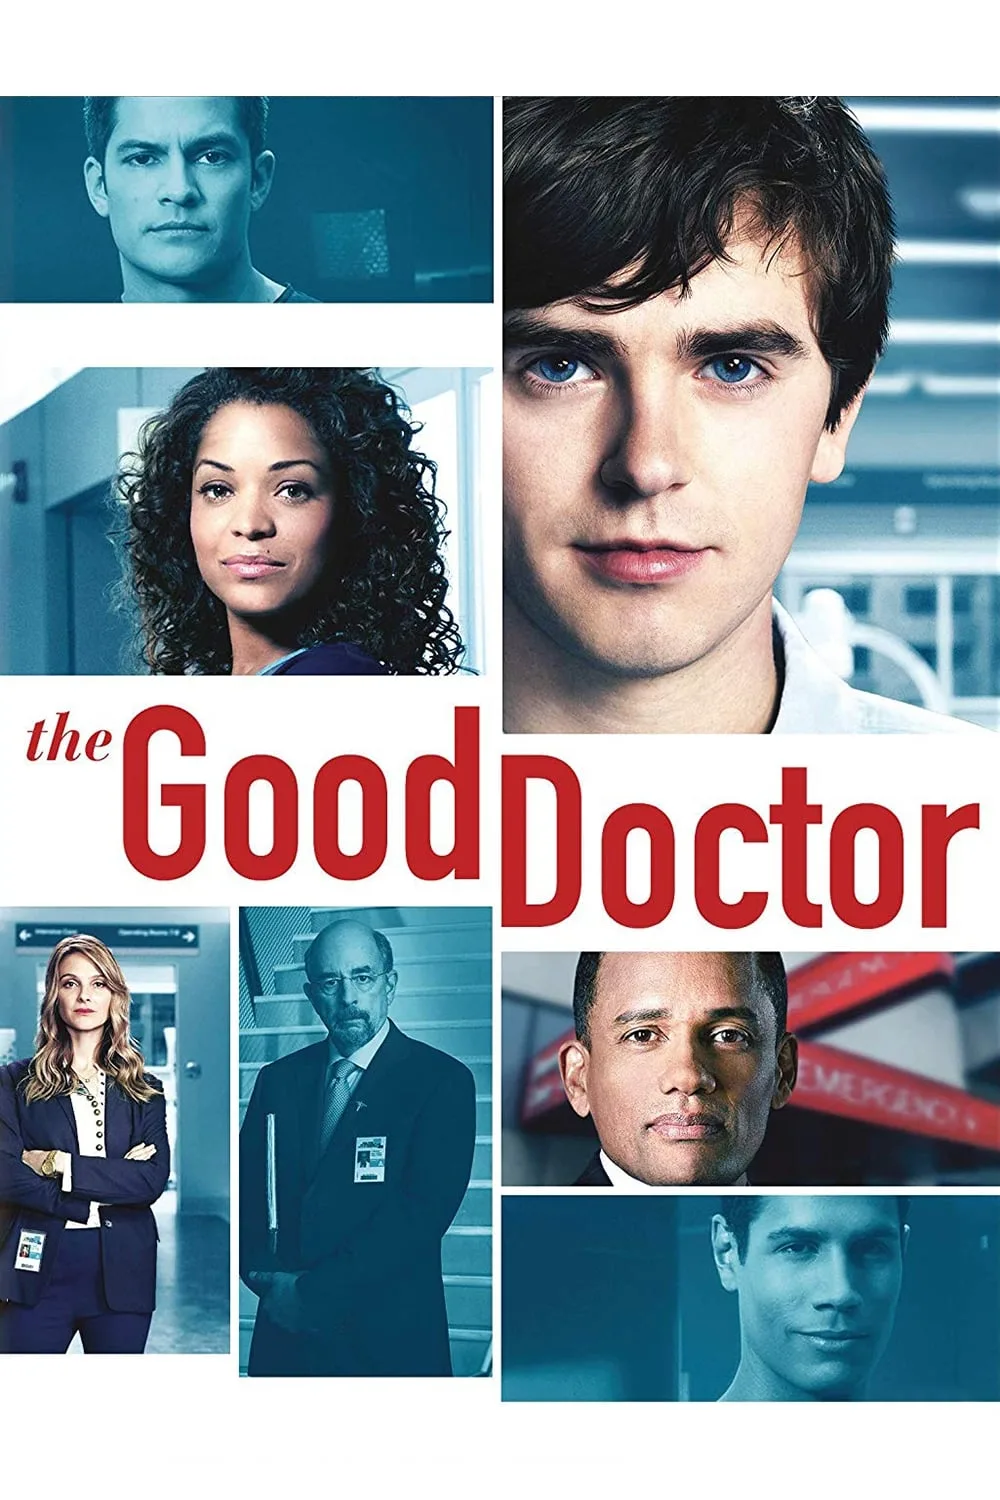 The Good Doctor Season 2 แพทย์อัจฉริยะหัวใจเทวดา ปี2 Ep.1-18 ซับไทย